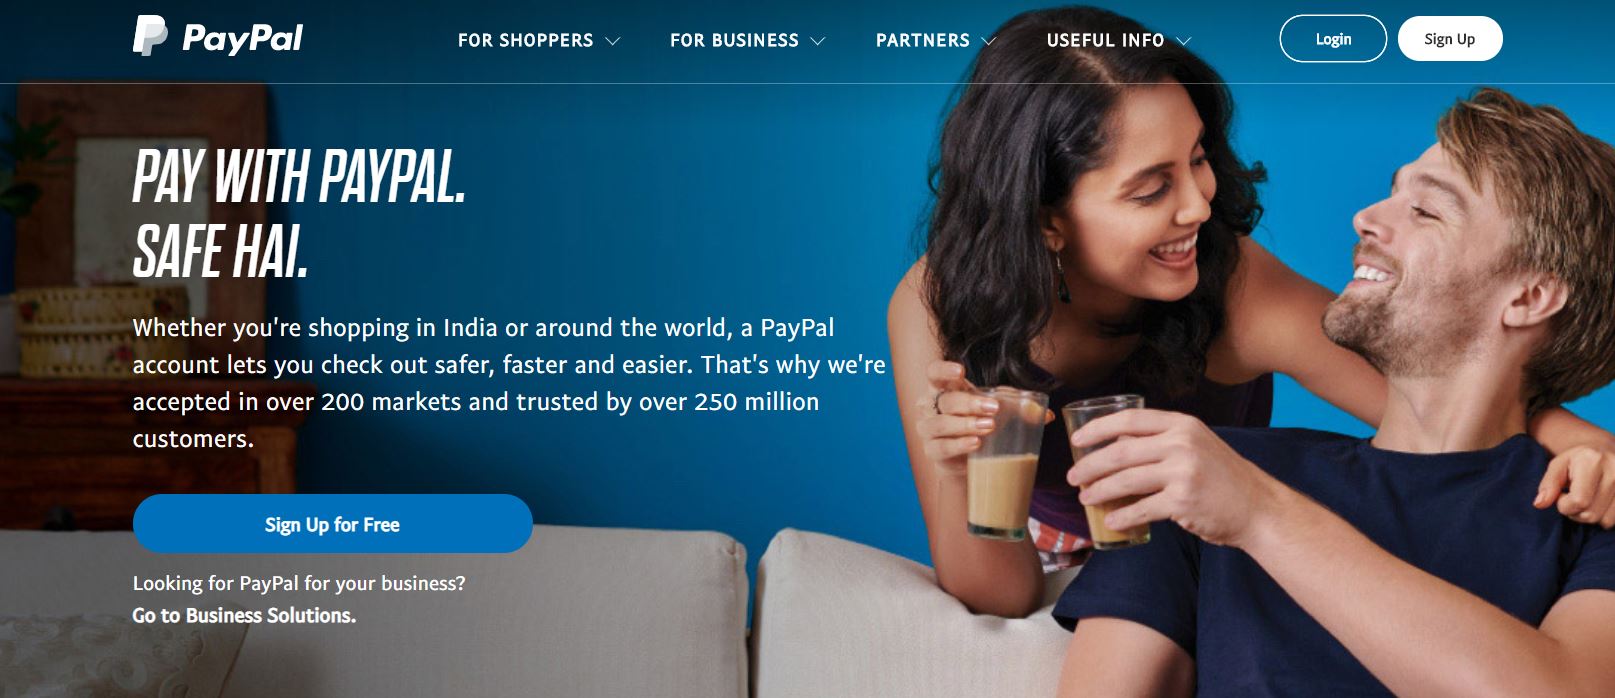 PayPal Marketing Psychology